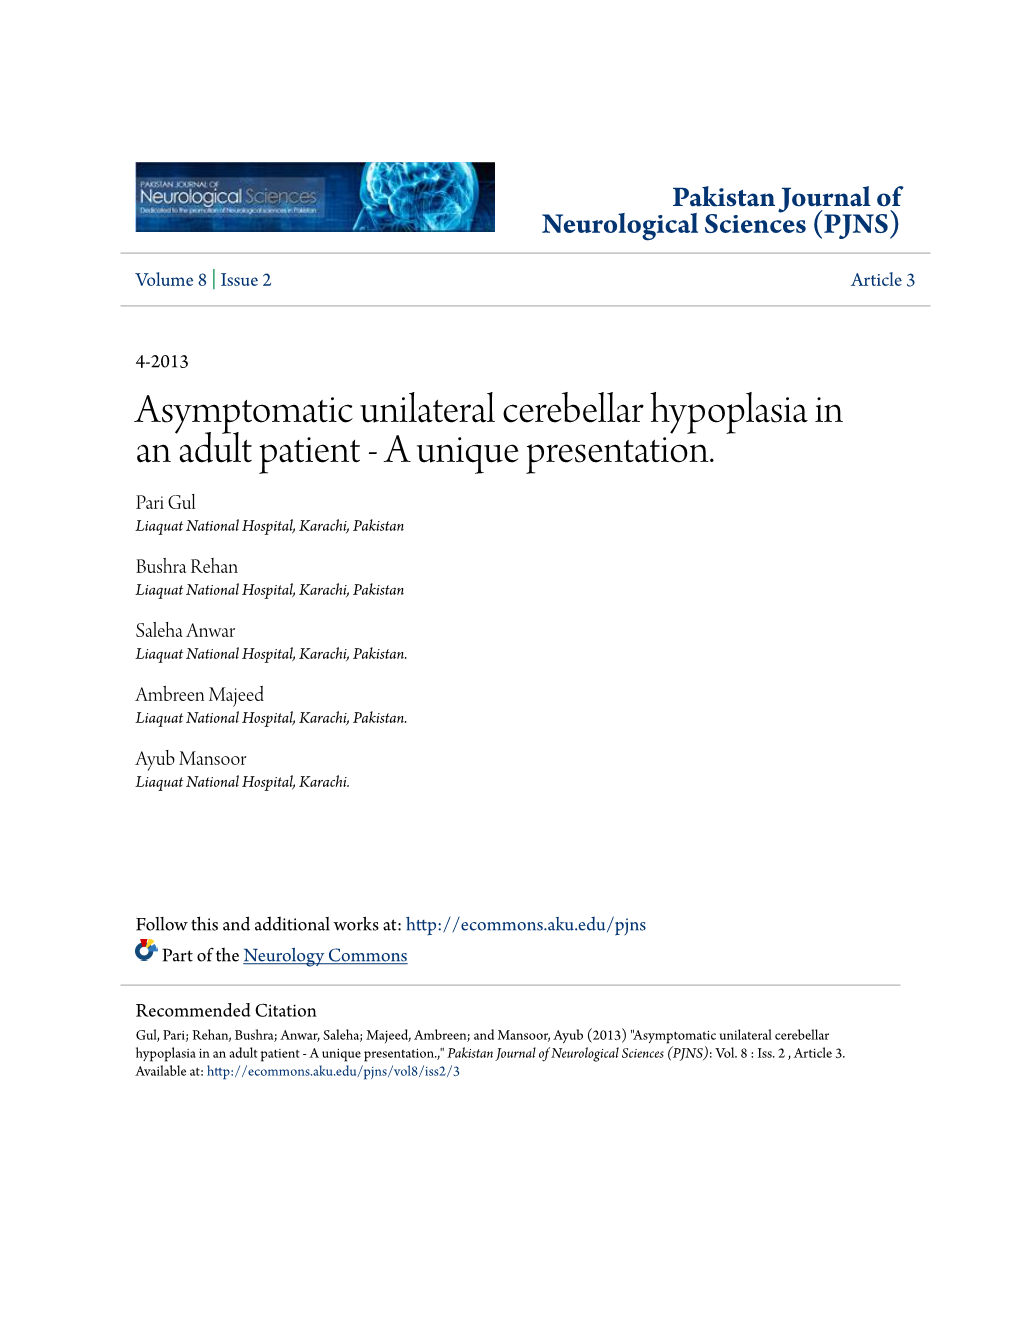 Asymptomatic Unilateral Cerebellar Hypoplasia in an Adult Patient - a Unique Presentation